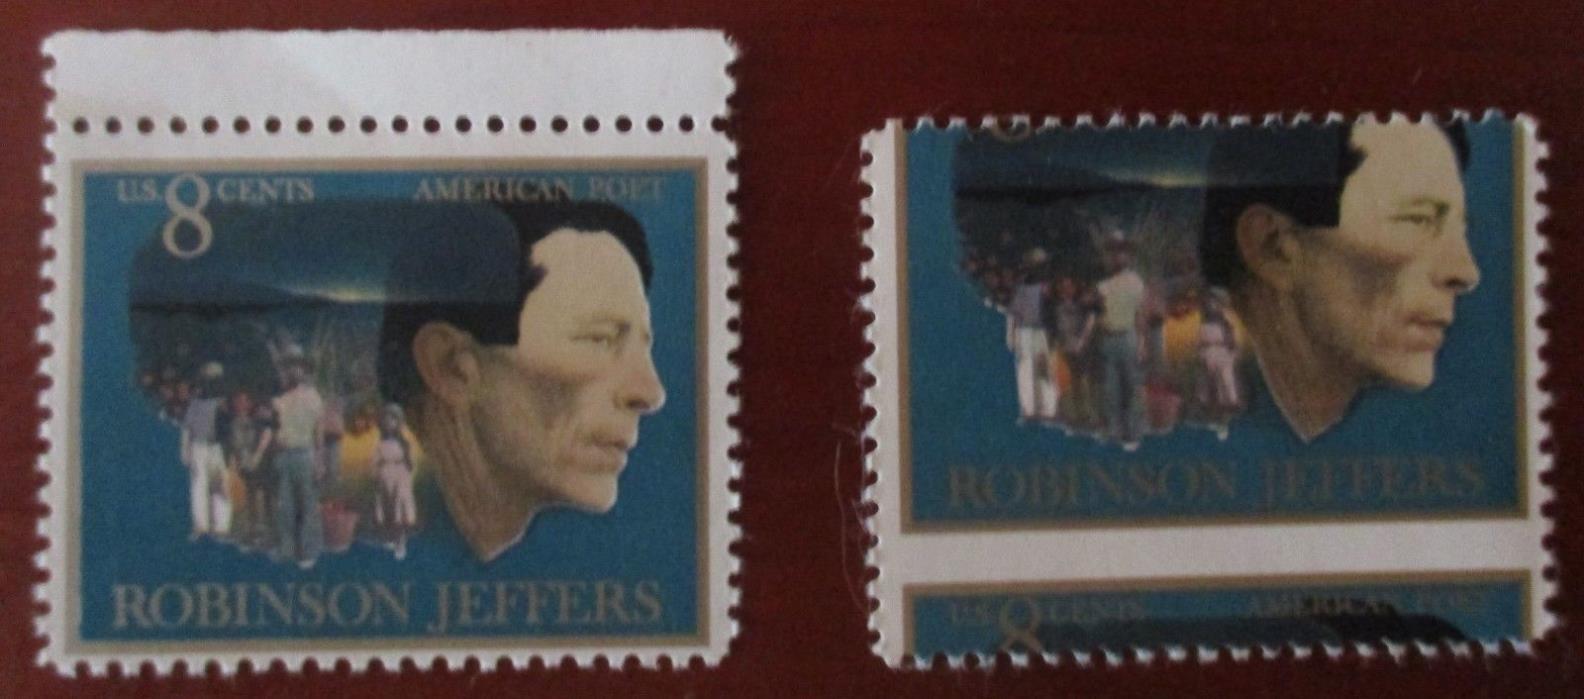 #1485 Mint Stamp Mis-Perf (8 Cent Robinson Jeffers)